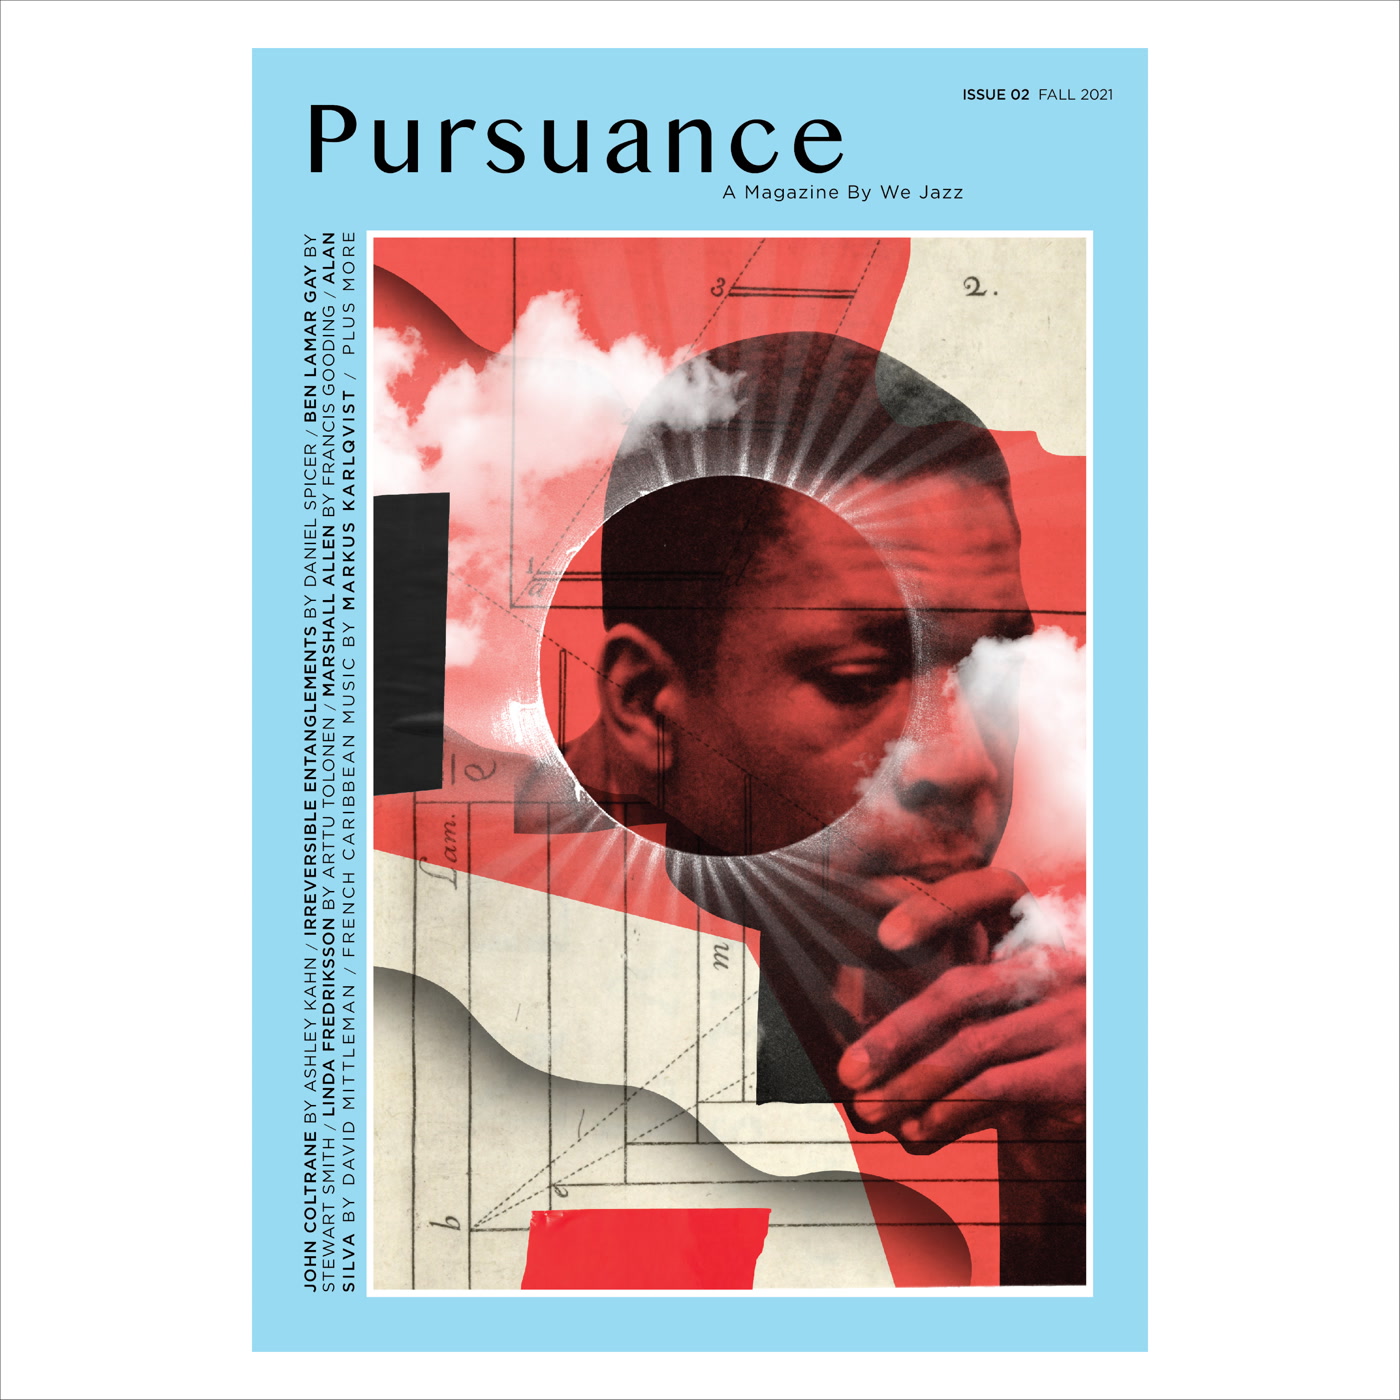 We Jazz Magazine – Pursuance (We Jazz)